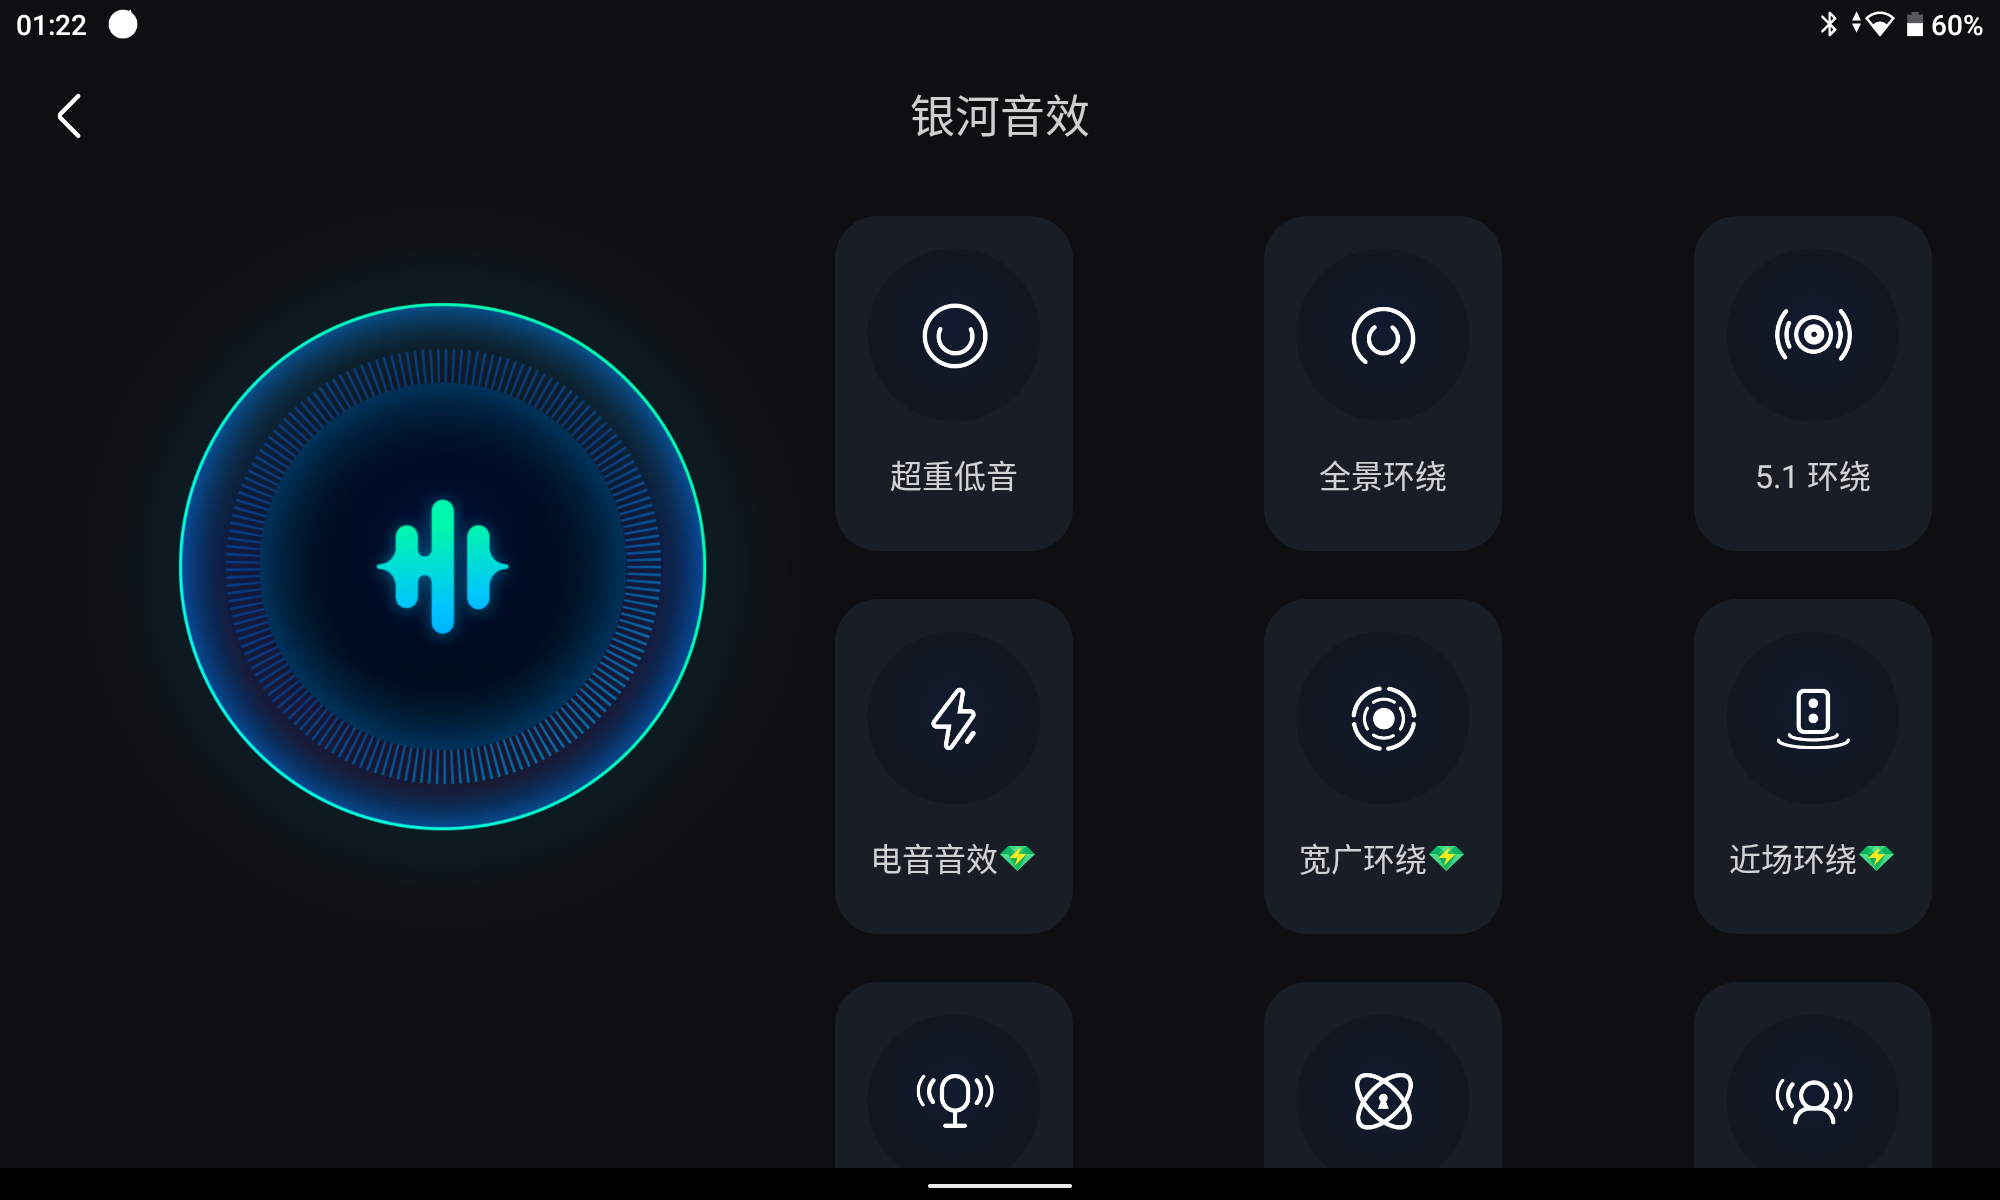 QQ最新音乐车机版2.4.2.0  官方车载版  横屏UI大升级